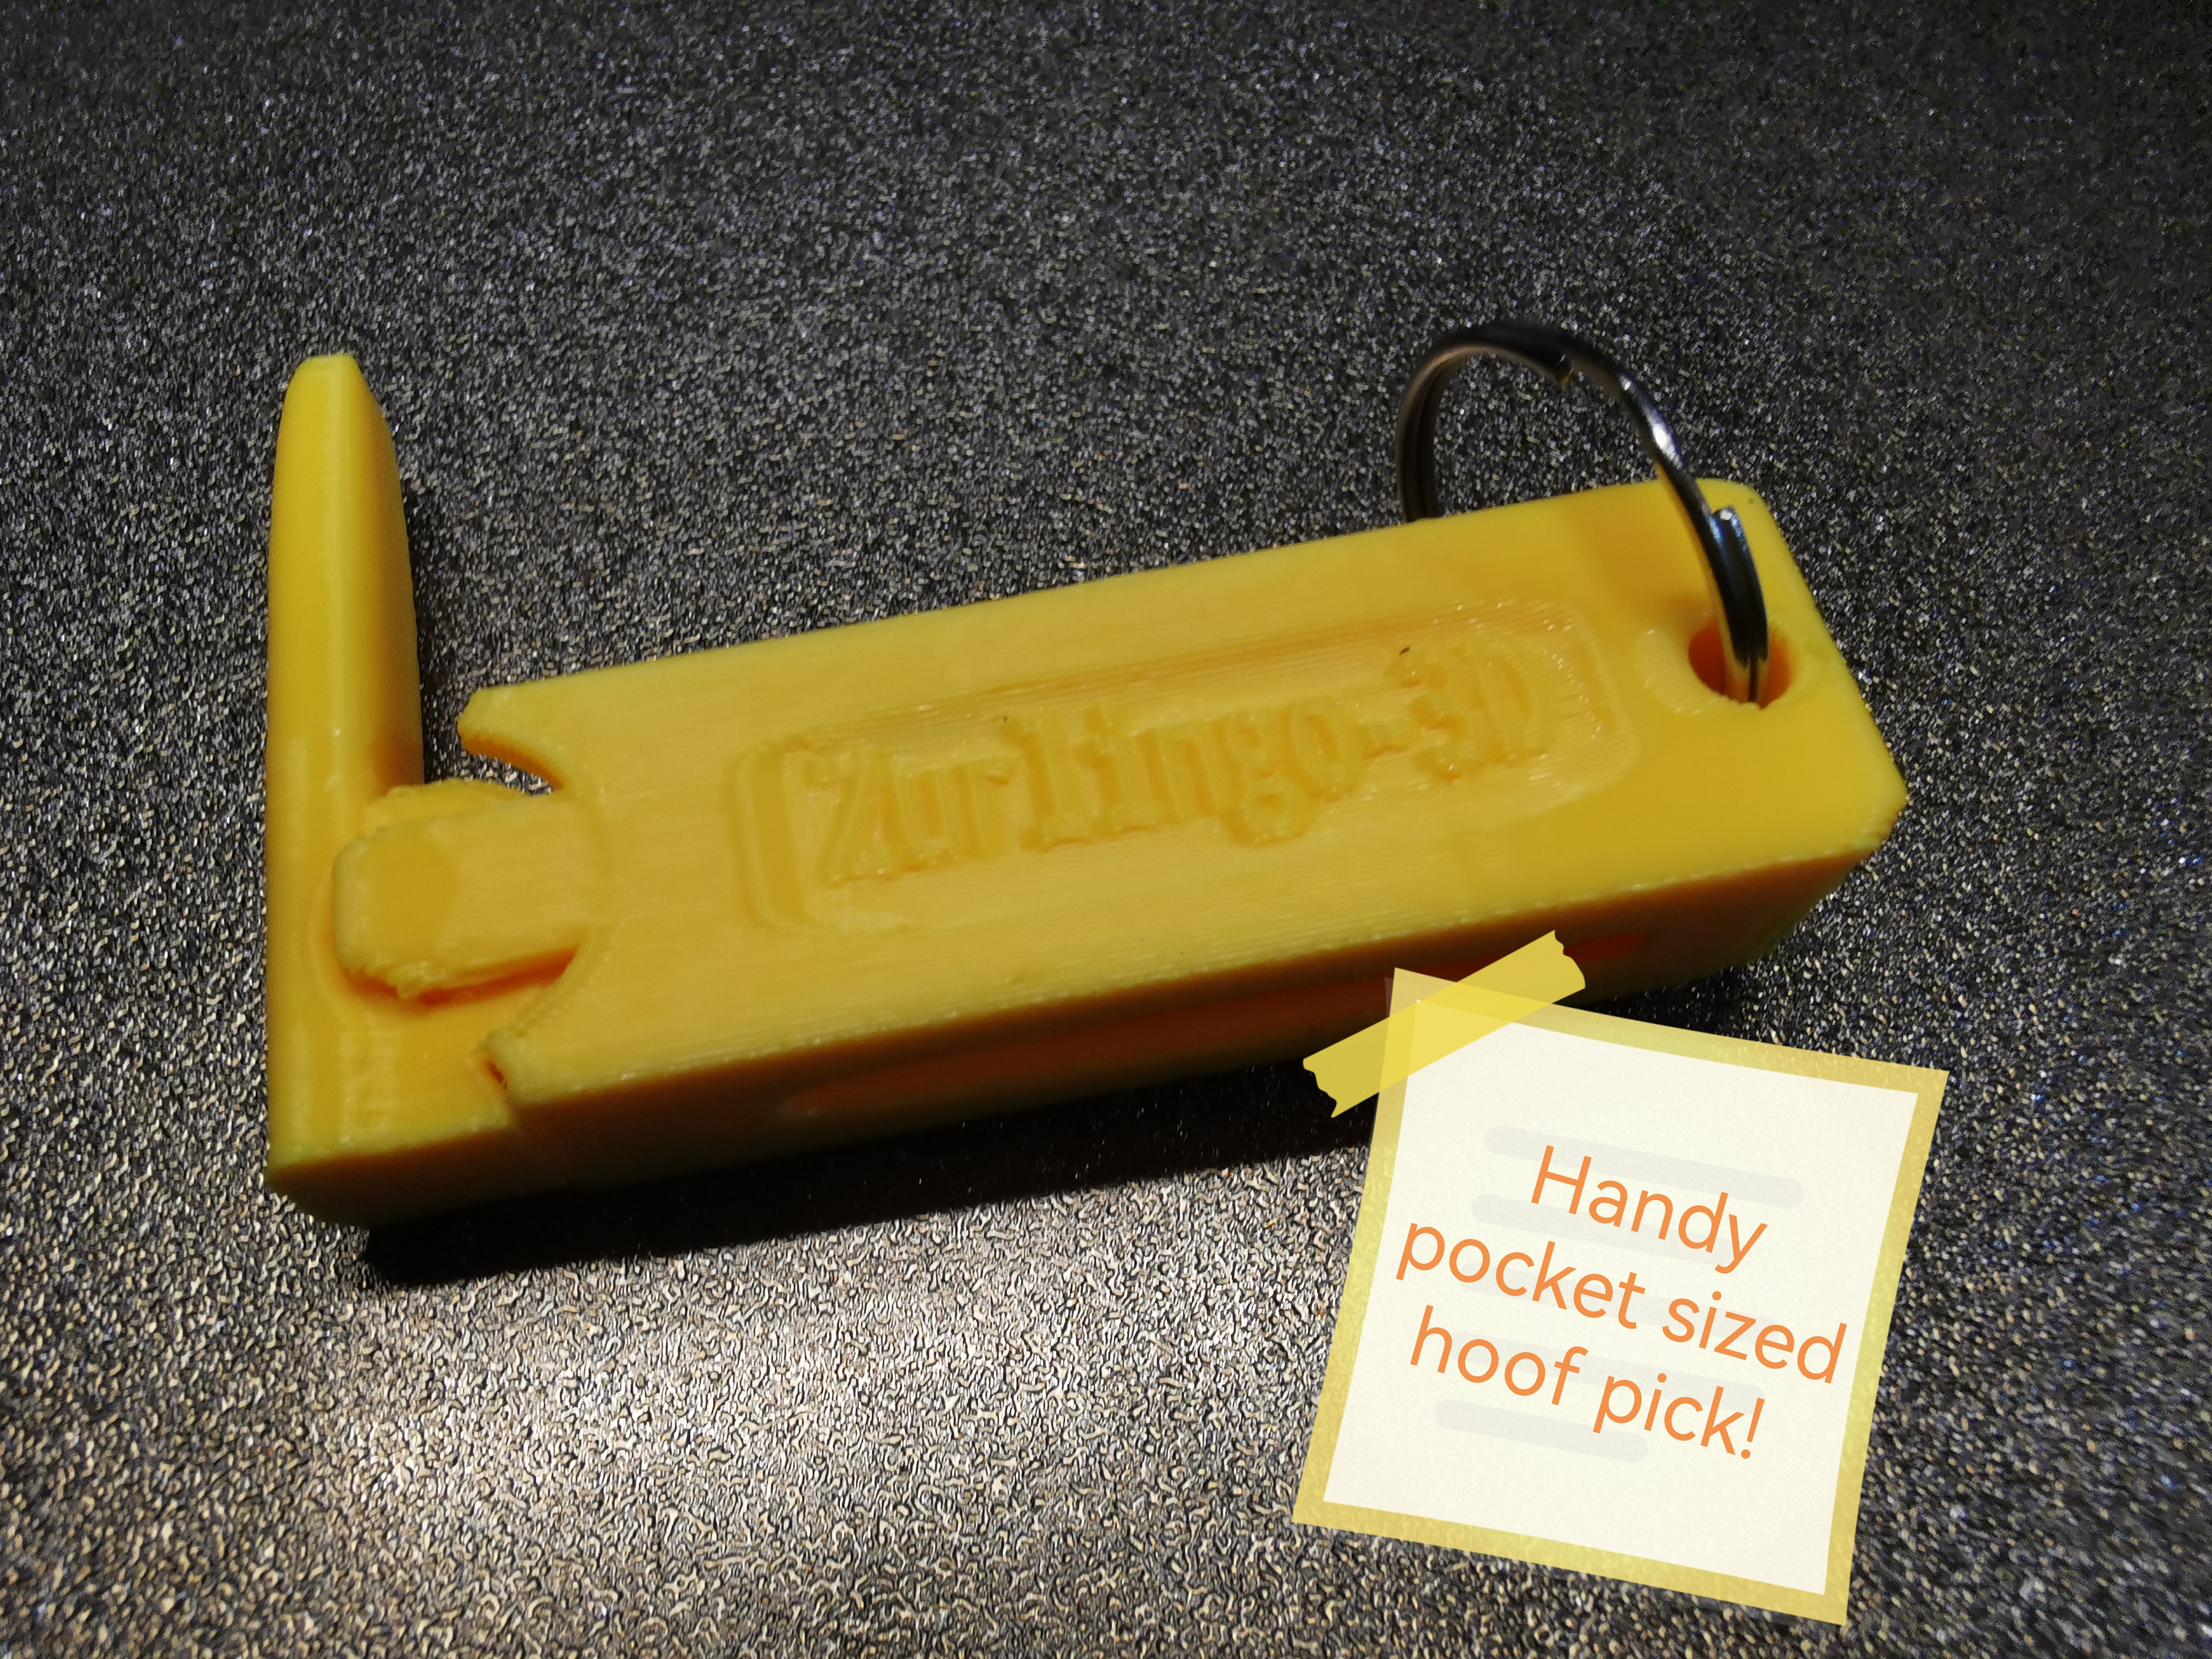 Handy Pocket Sized Hoof Pick Keyring